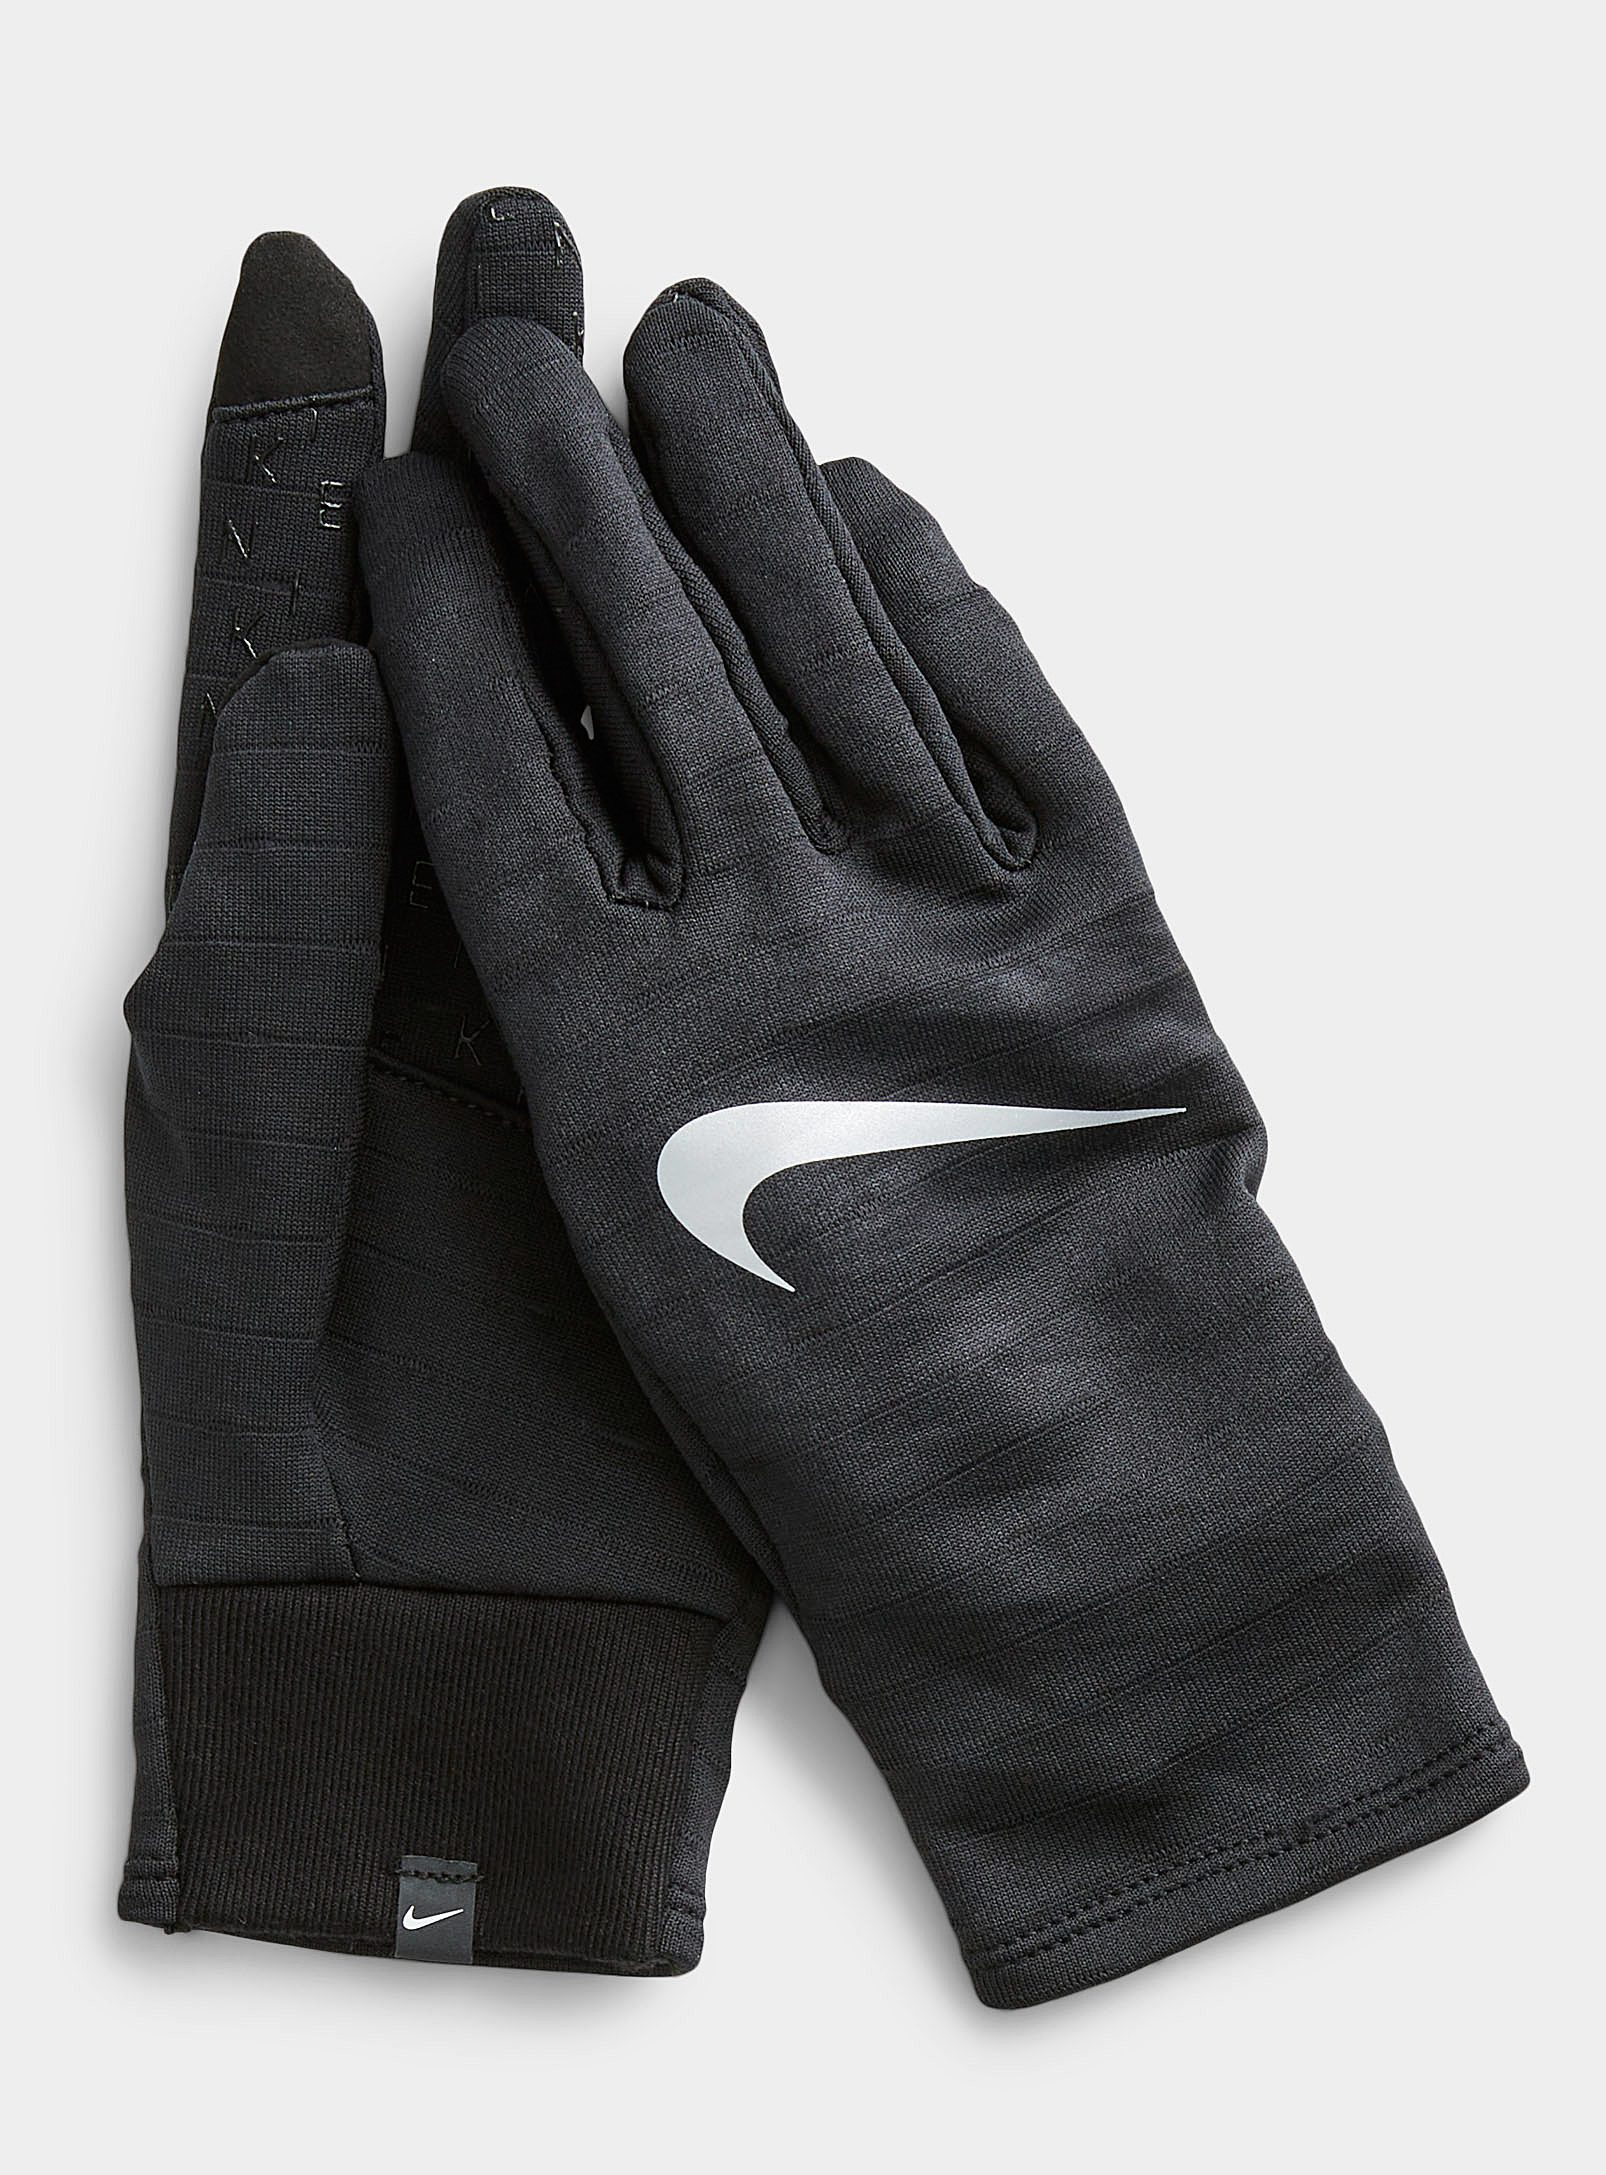 Nike - Men's 3D jersey running gloves